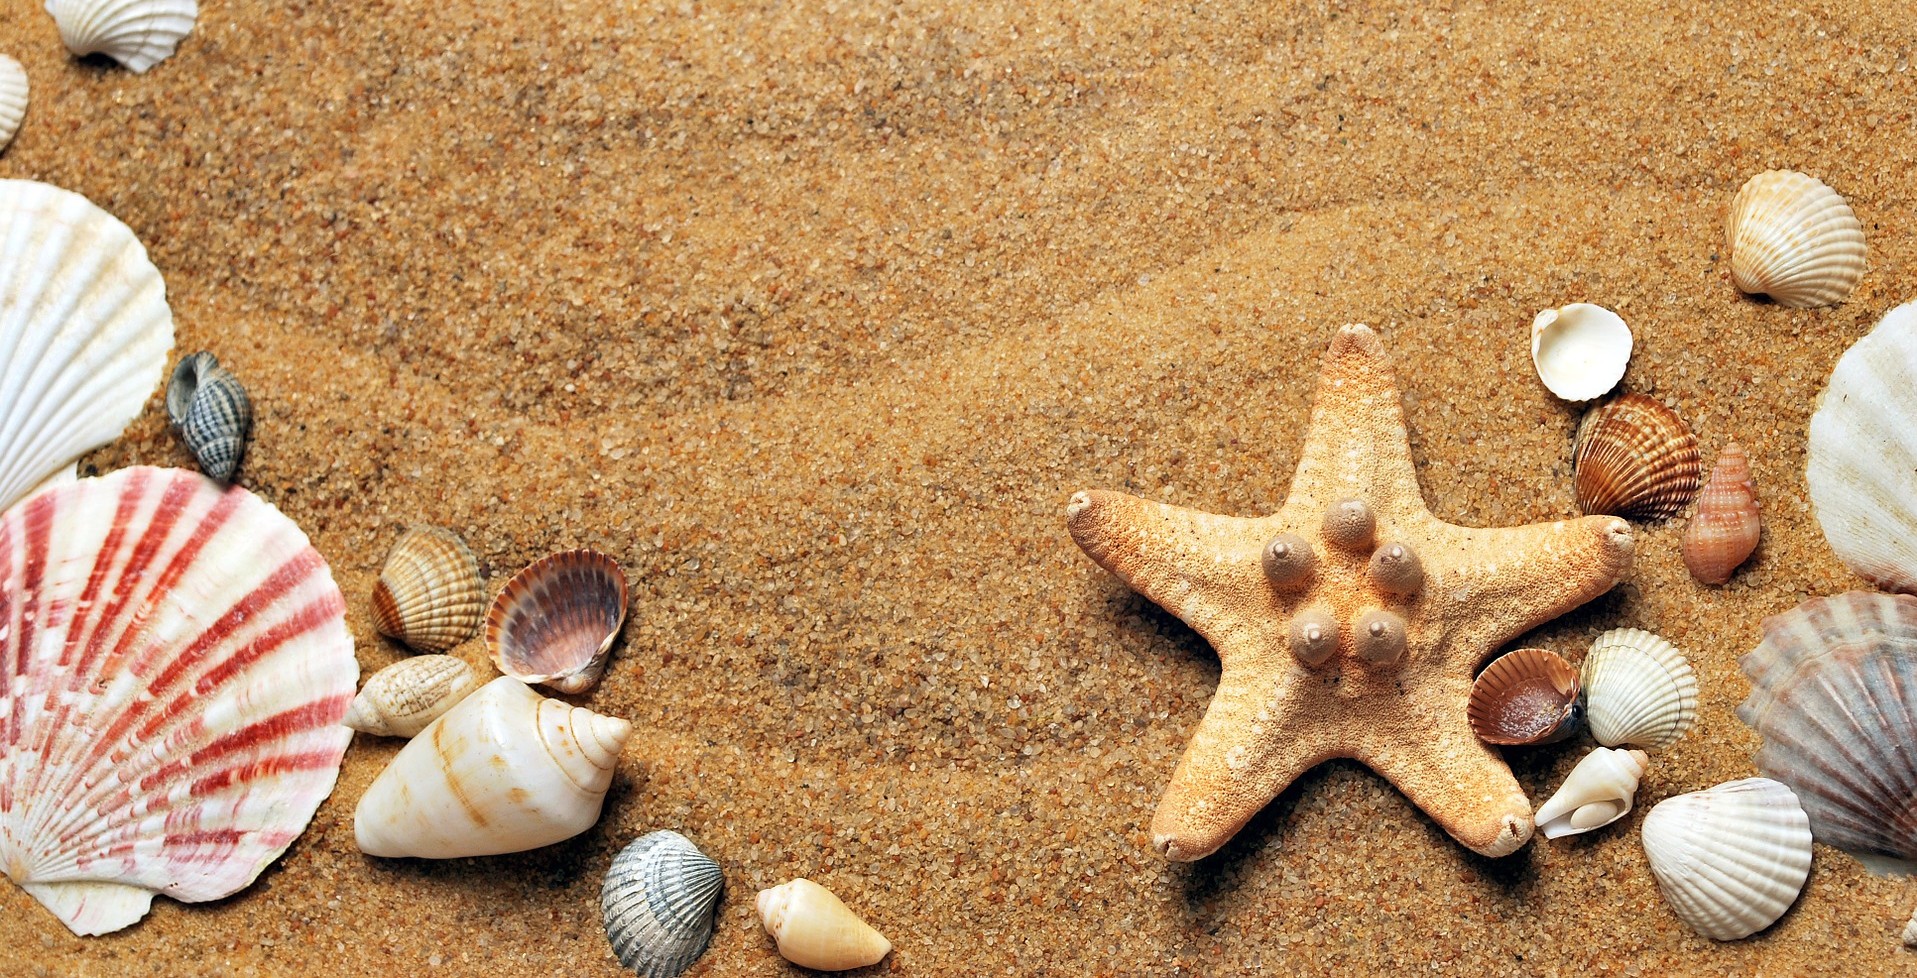 Shells on sand at a beach